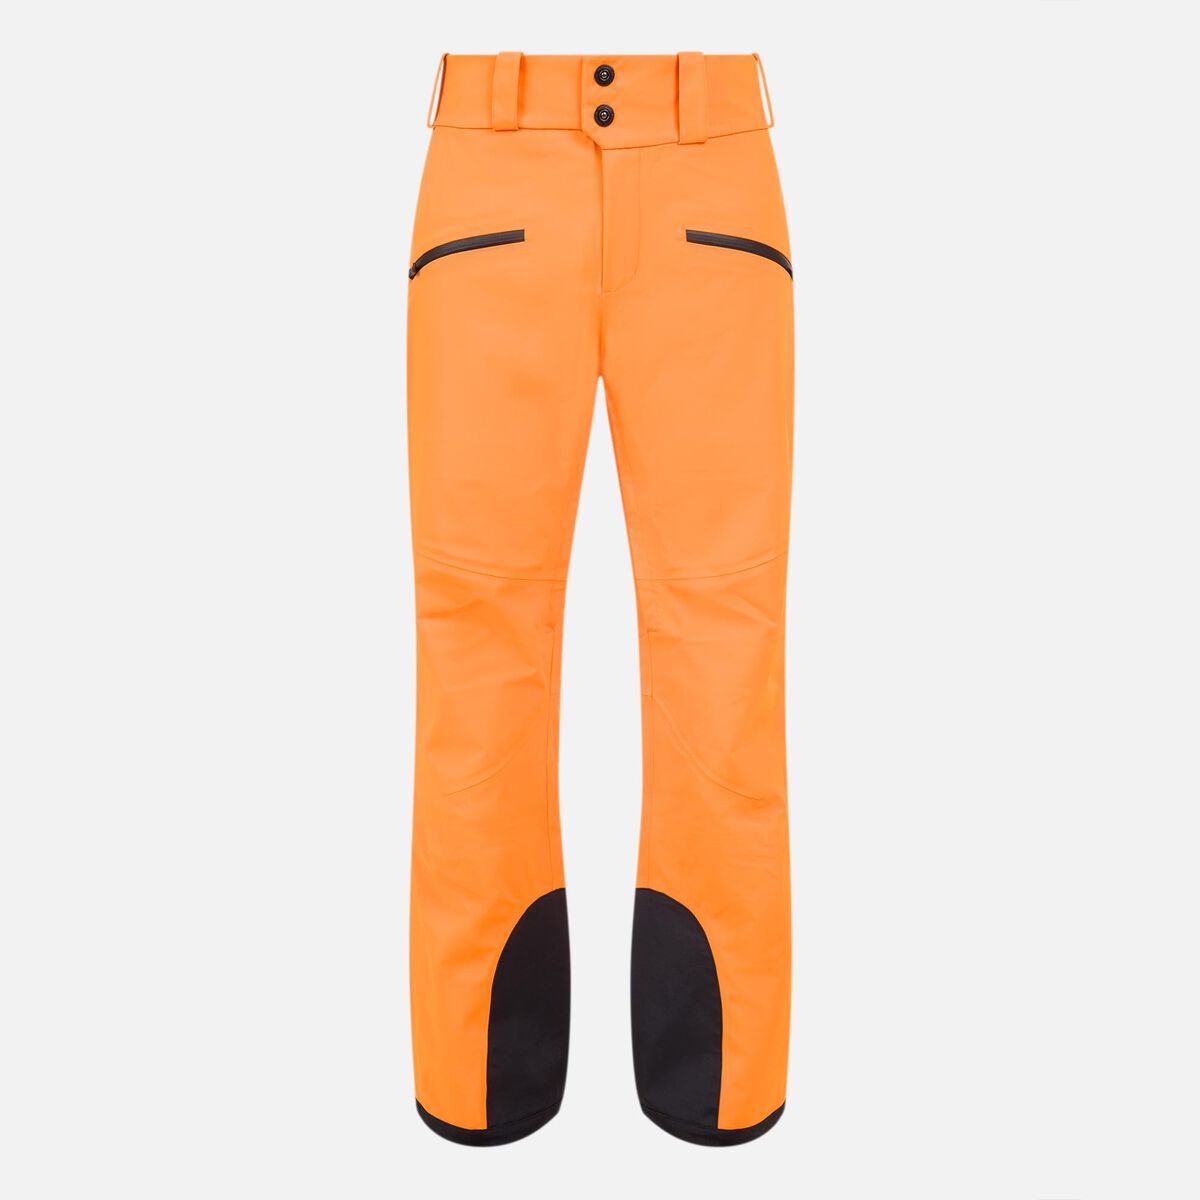 Men's Evader Ski Pants